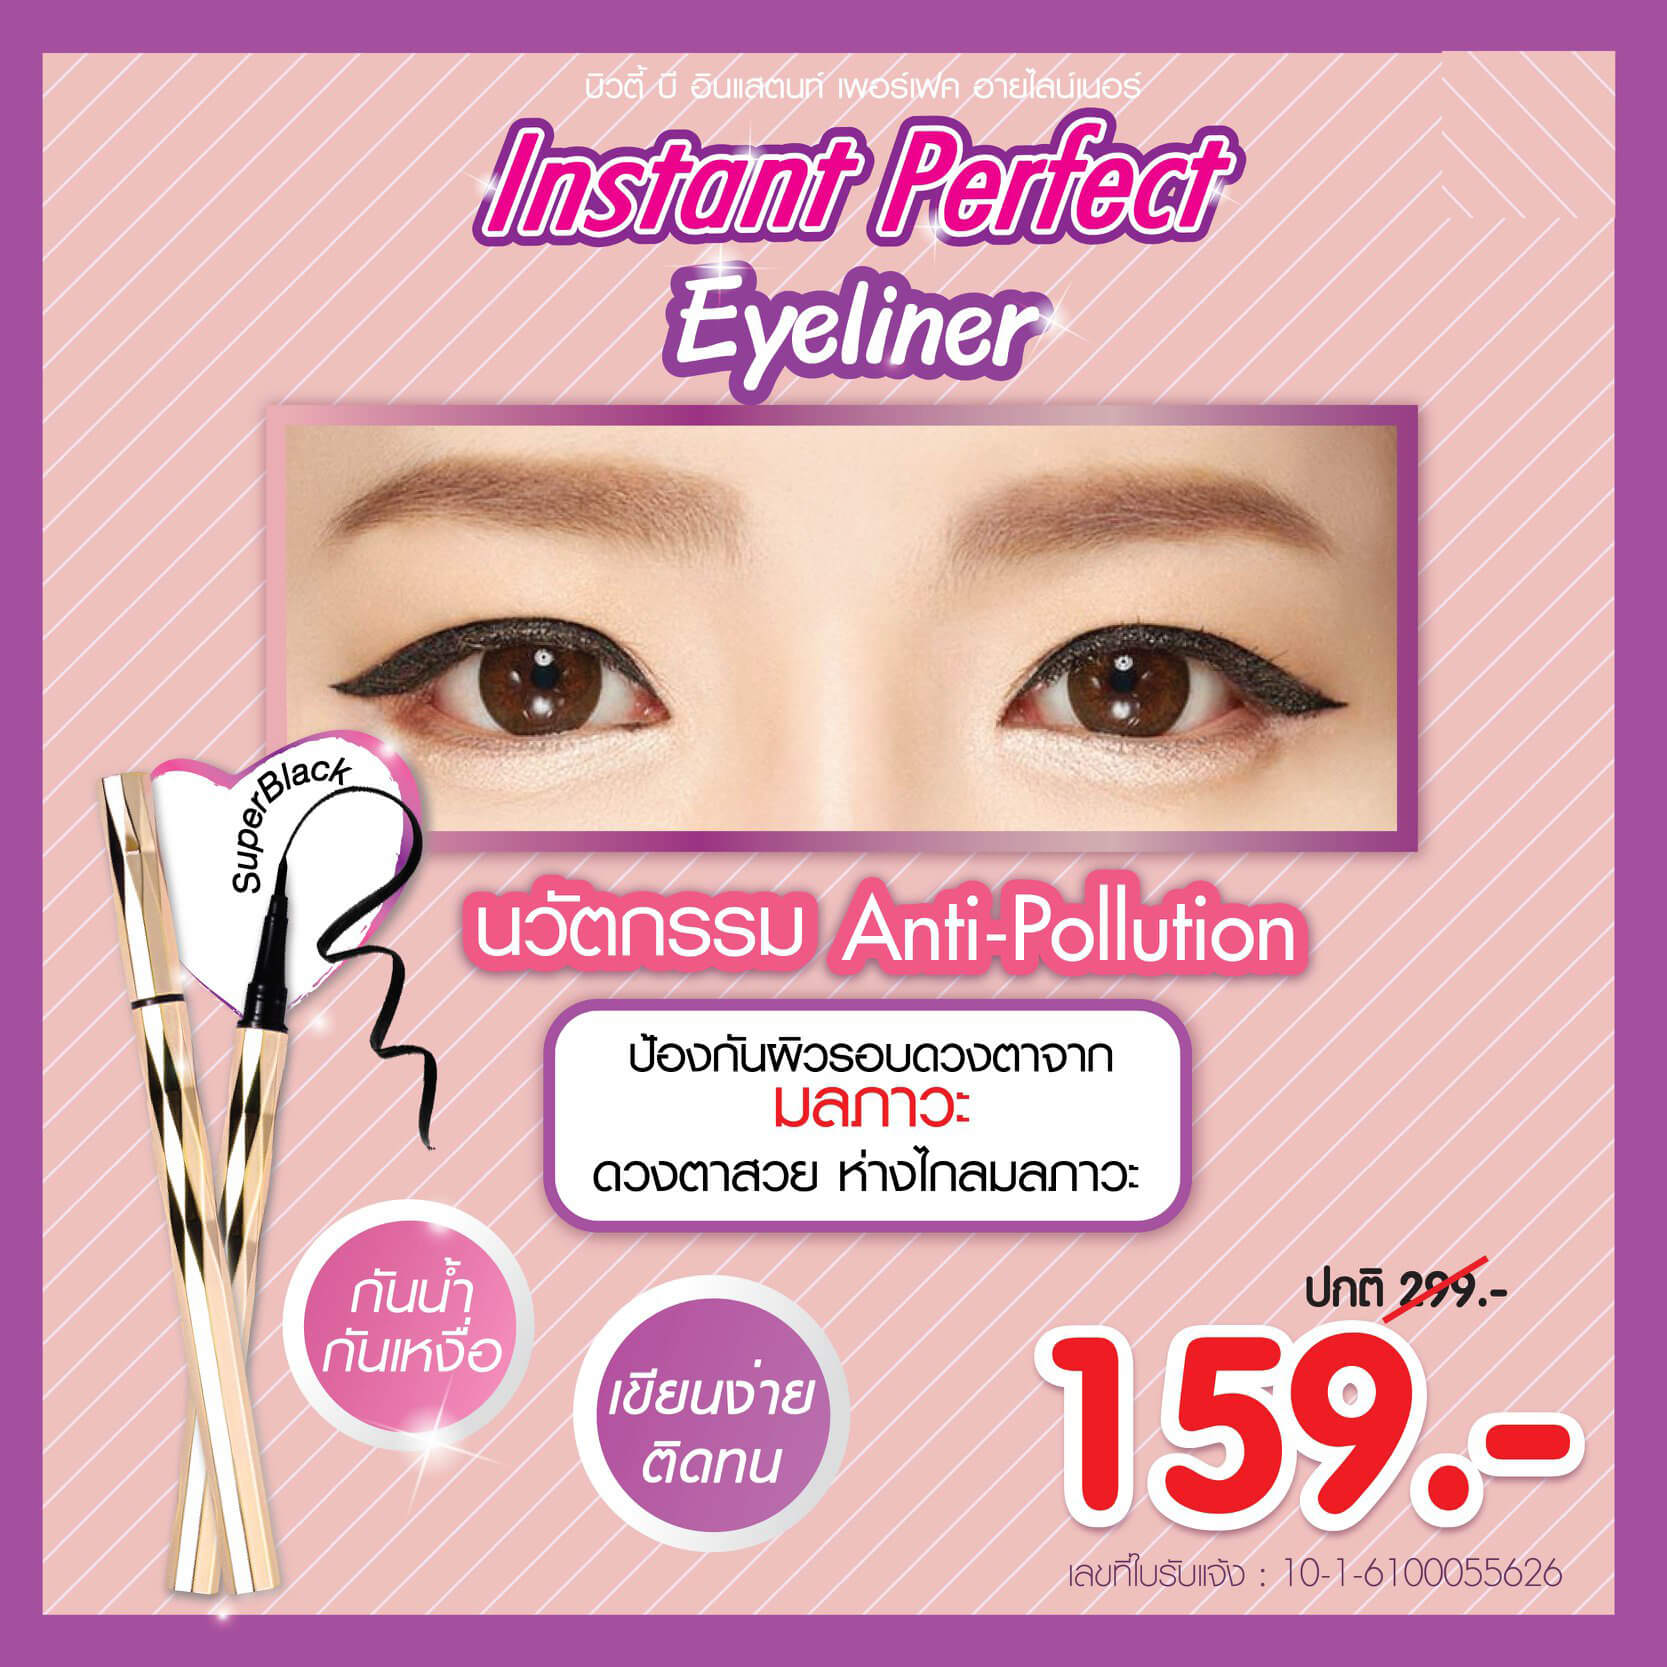 Beautii Be Instant Perfect Eyeliner 1.2 g.  - กันน้ำ กันเหงื่อ  - ติดนนาน  - เขียนง่าย  - สีดำสนิท Super Black